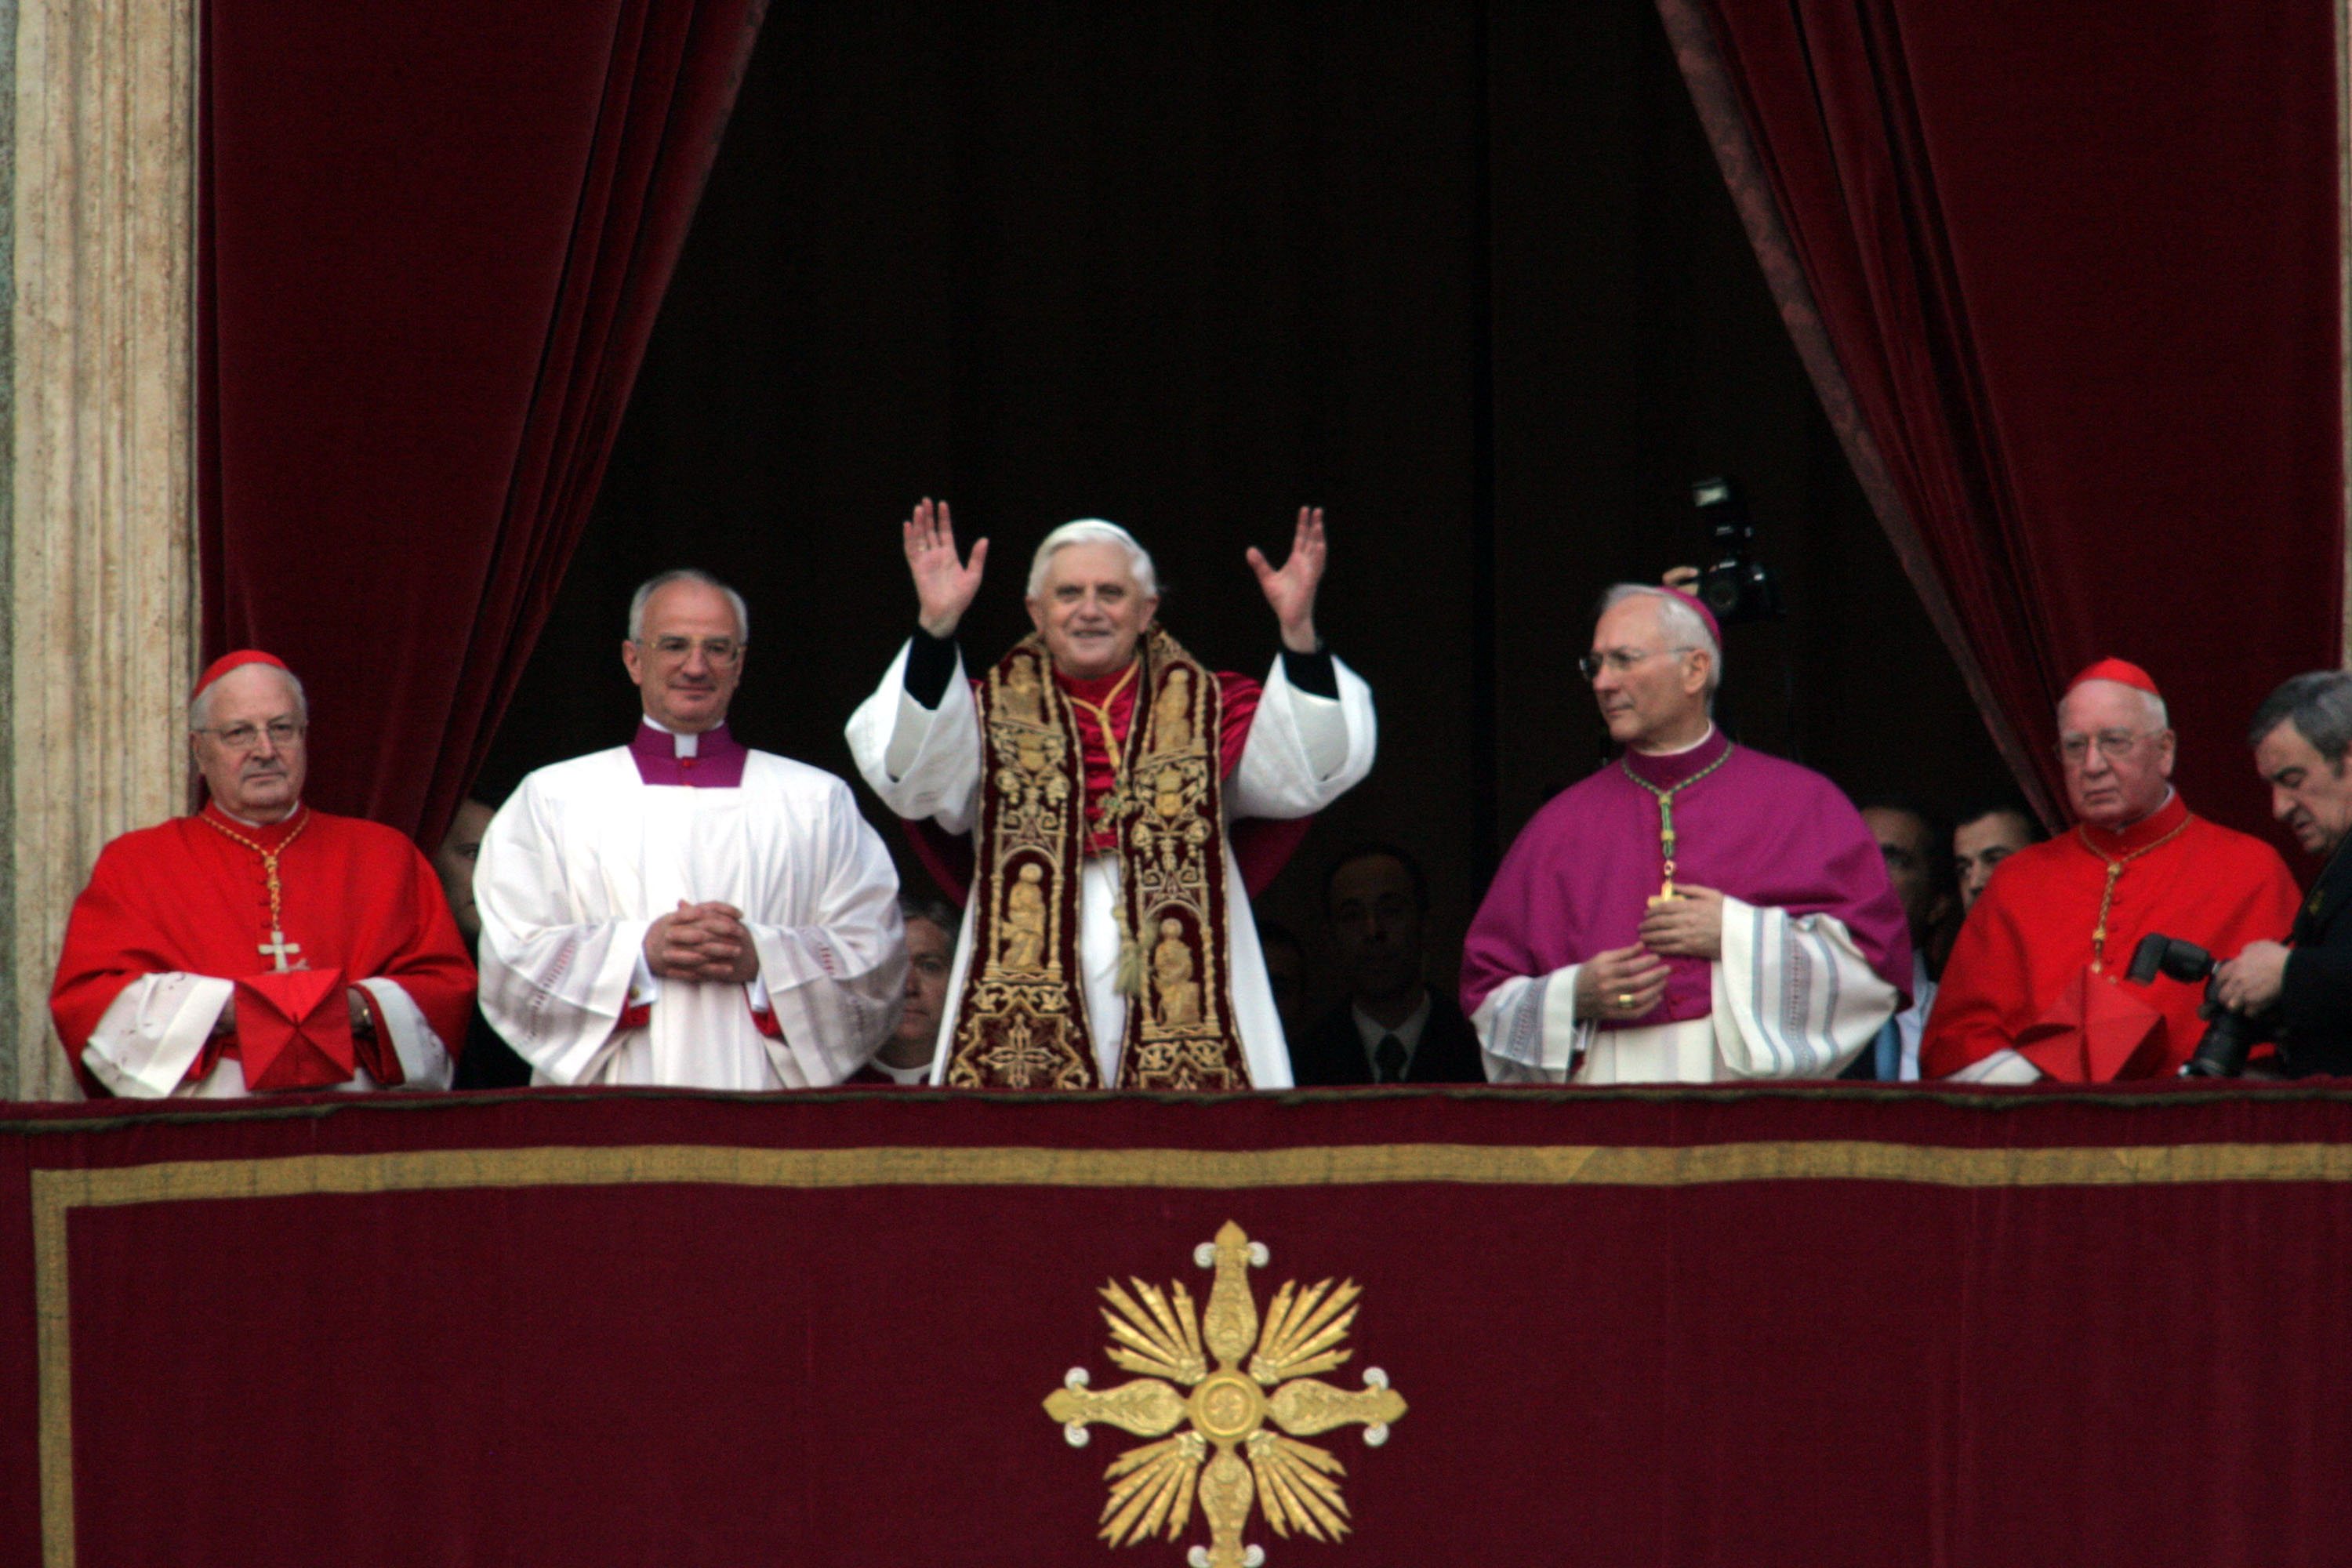 Cardinal Joseph Ratzinger is Named as Pope Benedict XVI - April 19, 2005